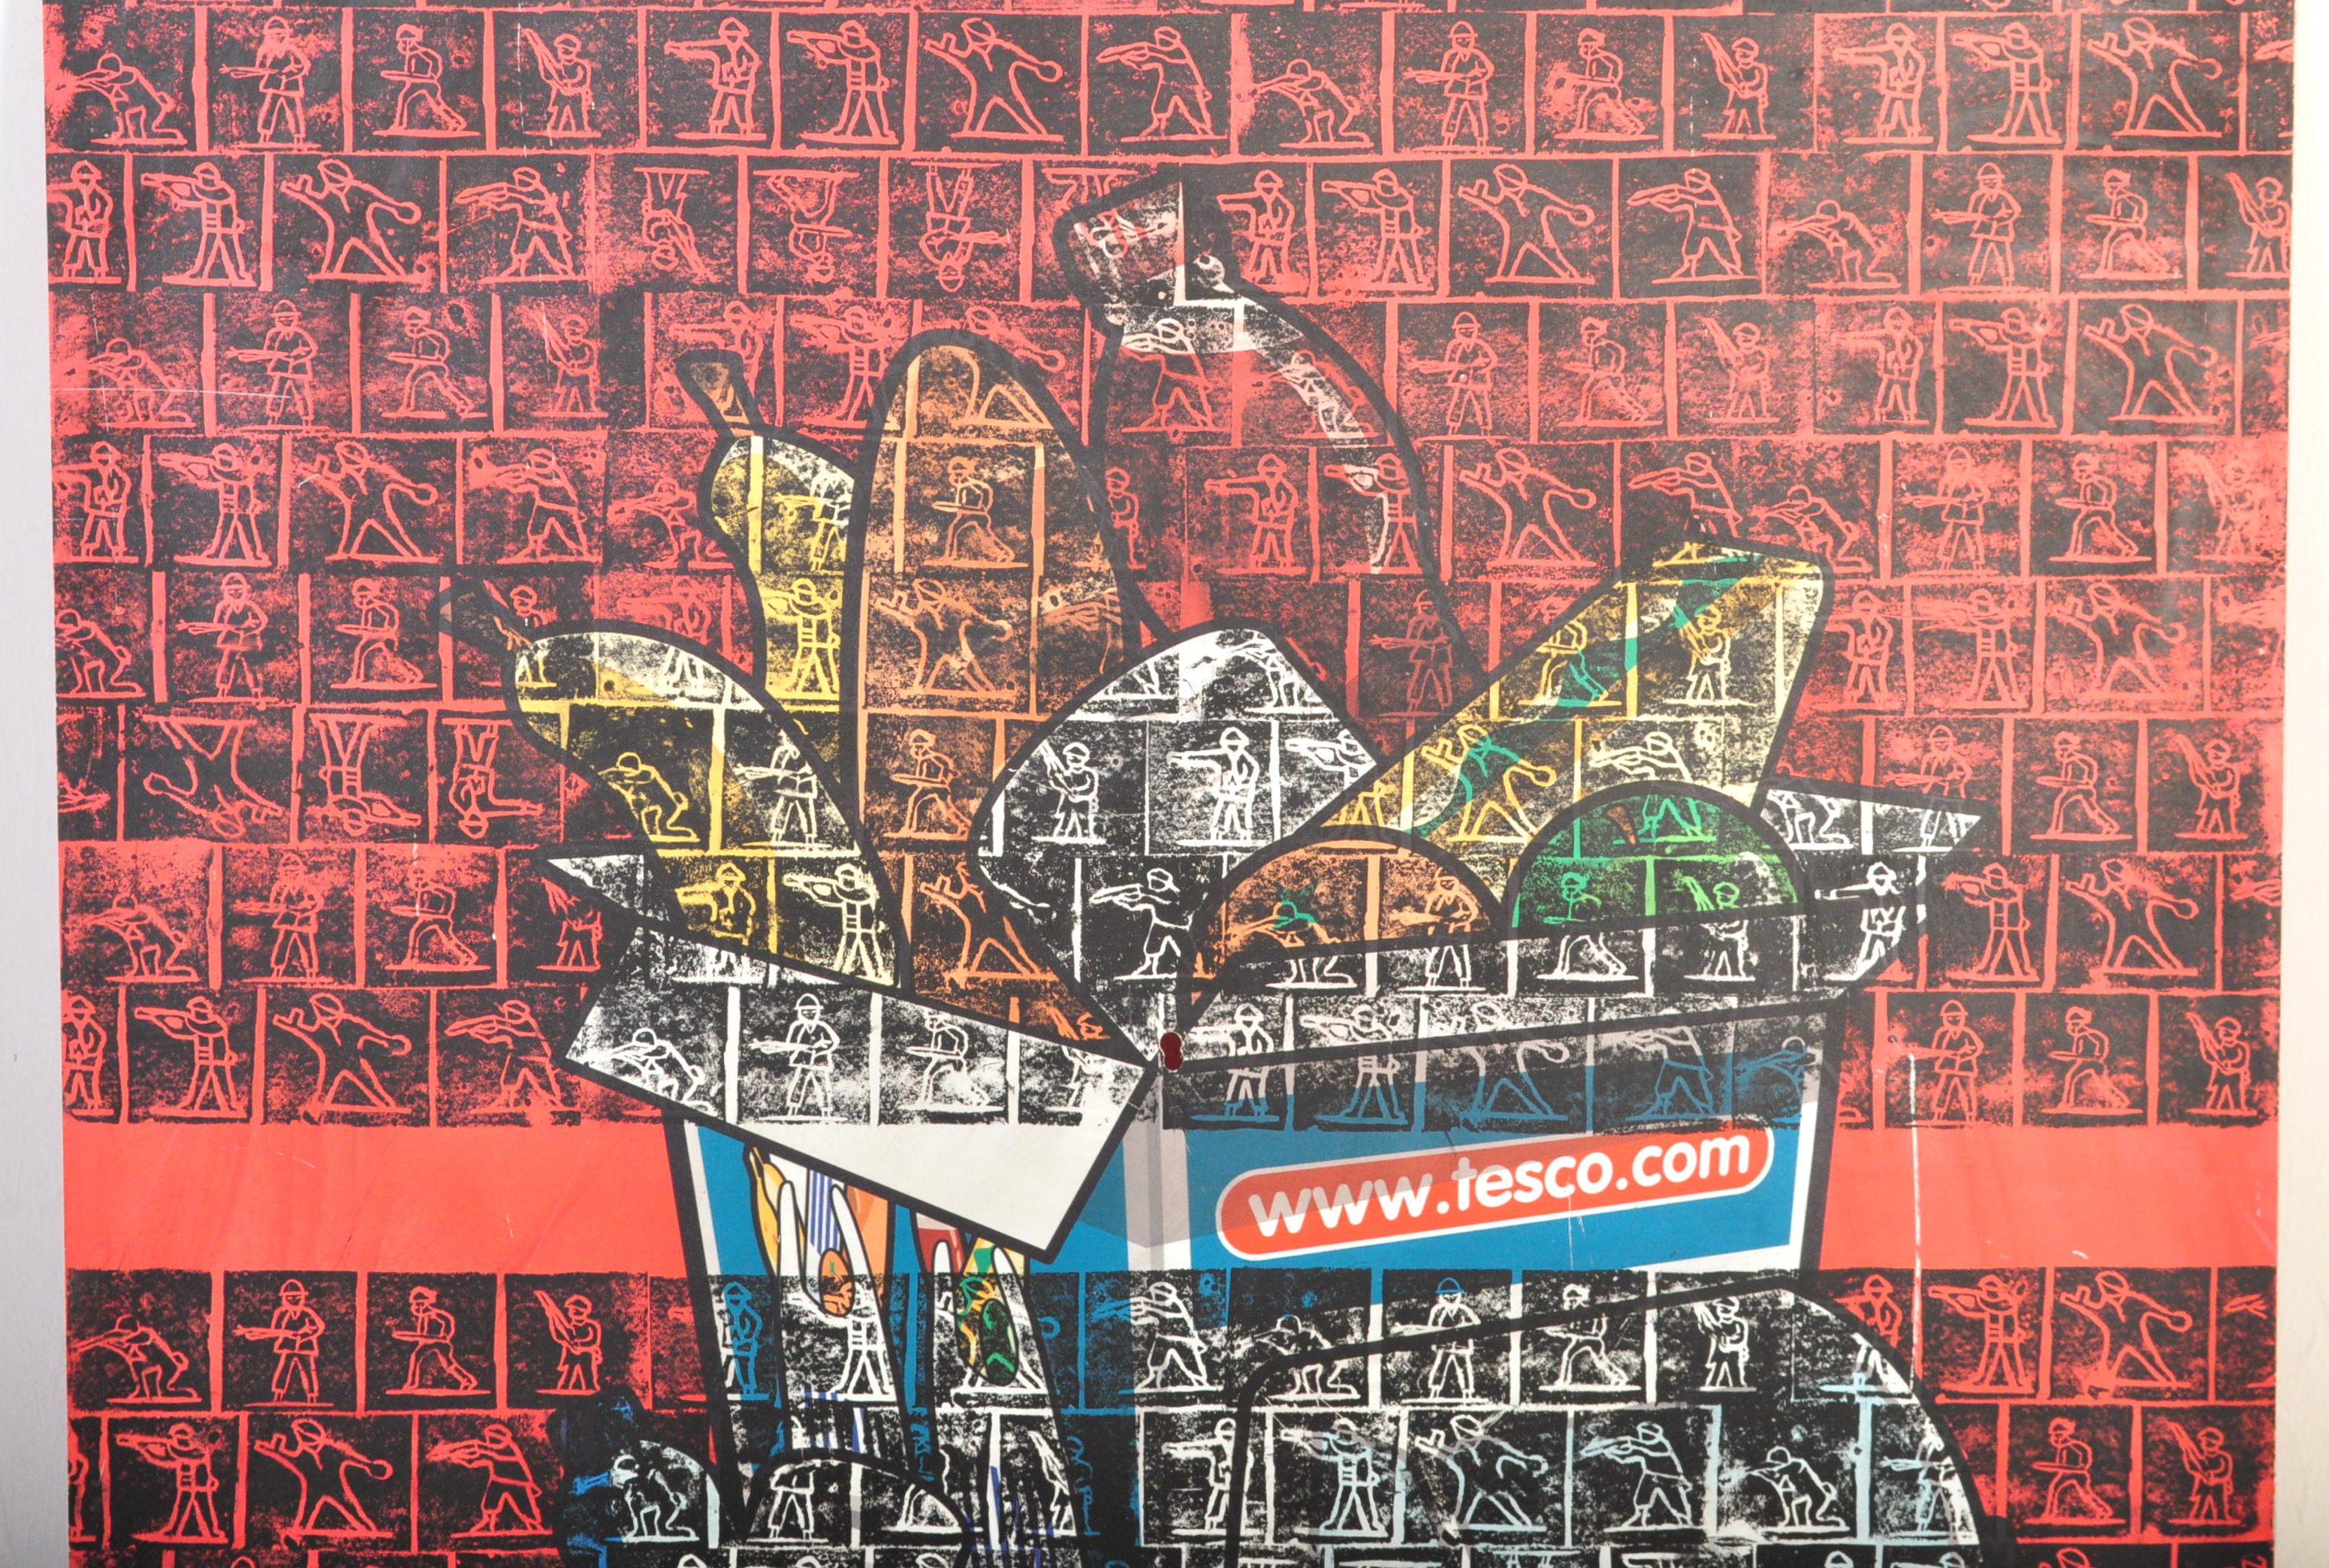 URBAN GRAFFITI - LOCAL BRISTOL ARTIST - SPRAY PAINT ON BOARD - Image 3 of 4